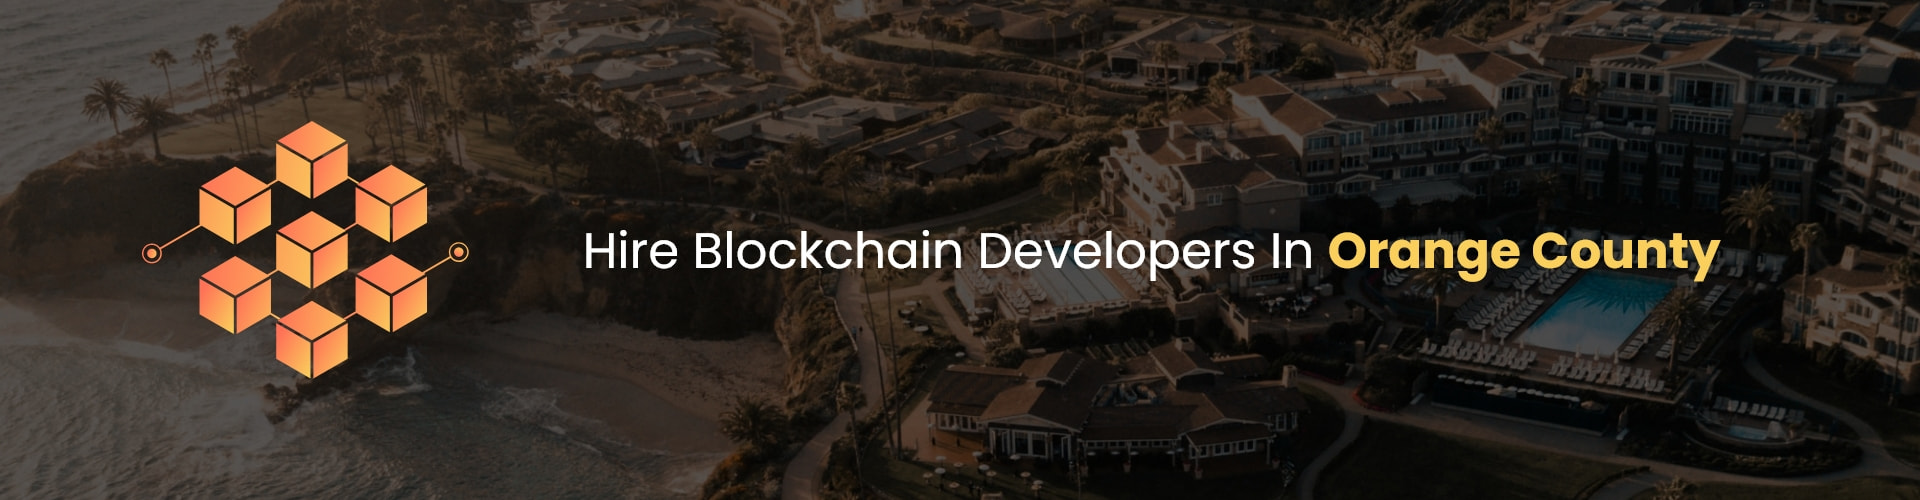 hire blockchain developers in orange county